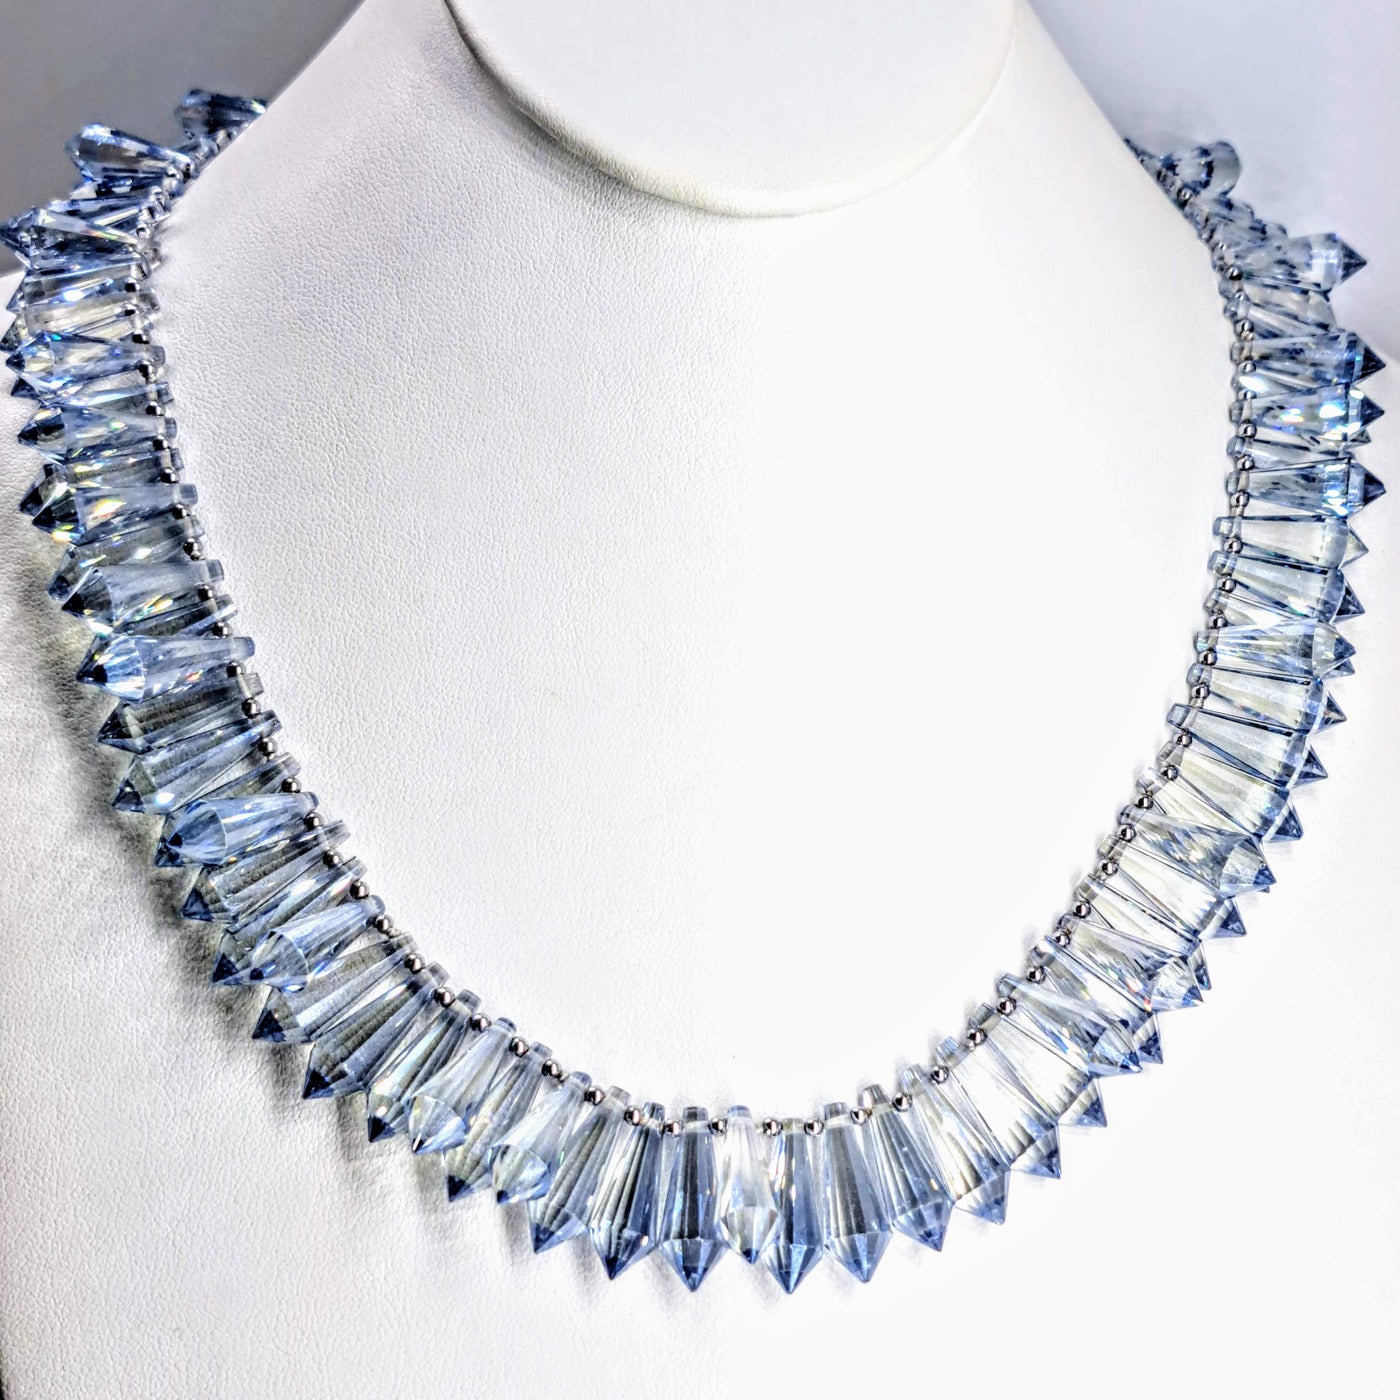 "Sparkle Fest - BLUE!" Necklaces - Swarovski Crystals with Anti-tarnish Sterling or 14K Gold